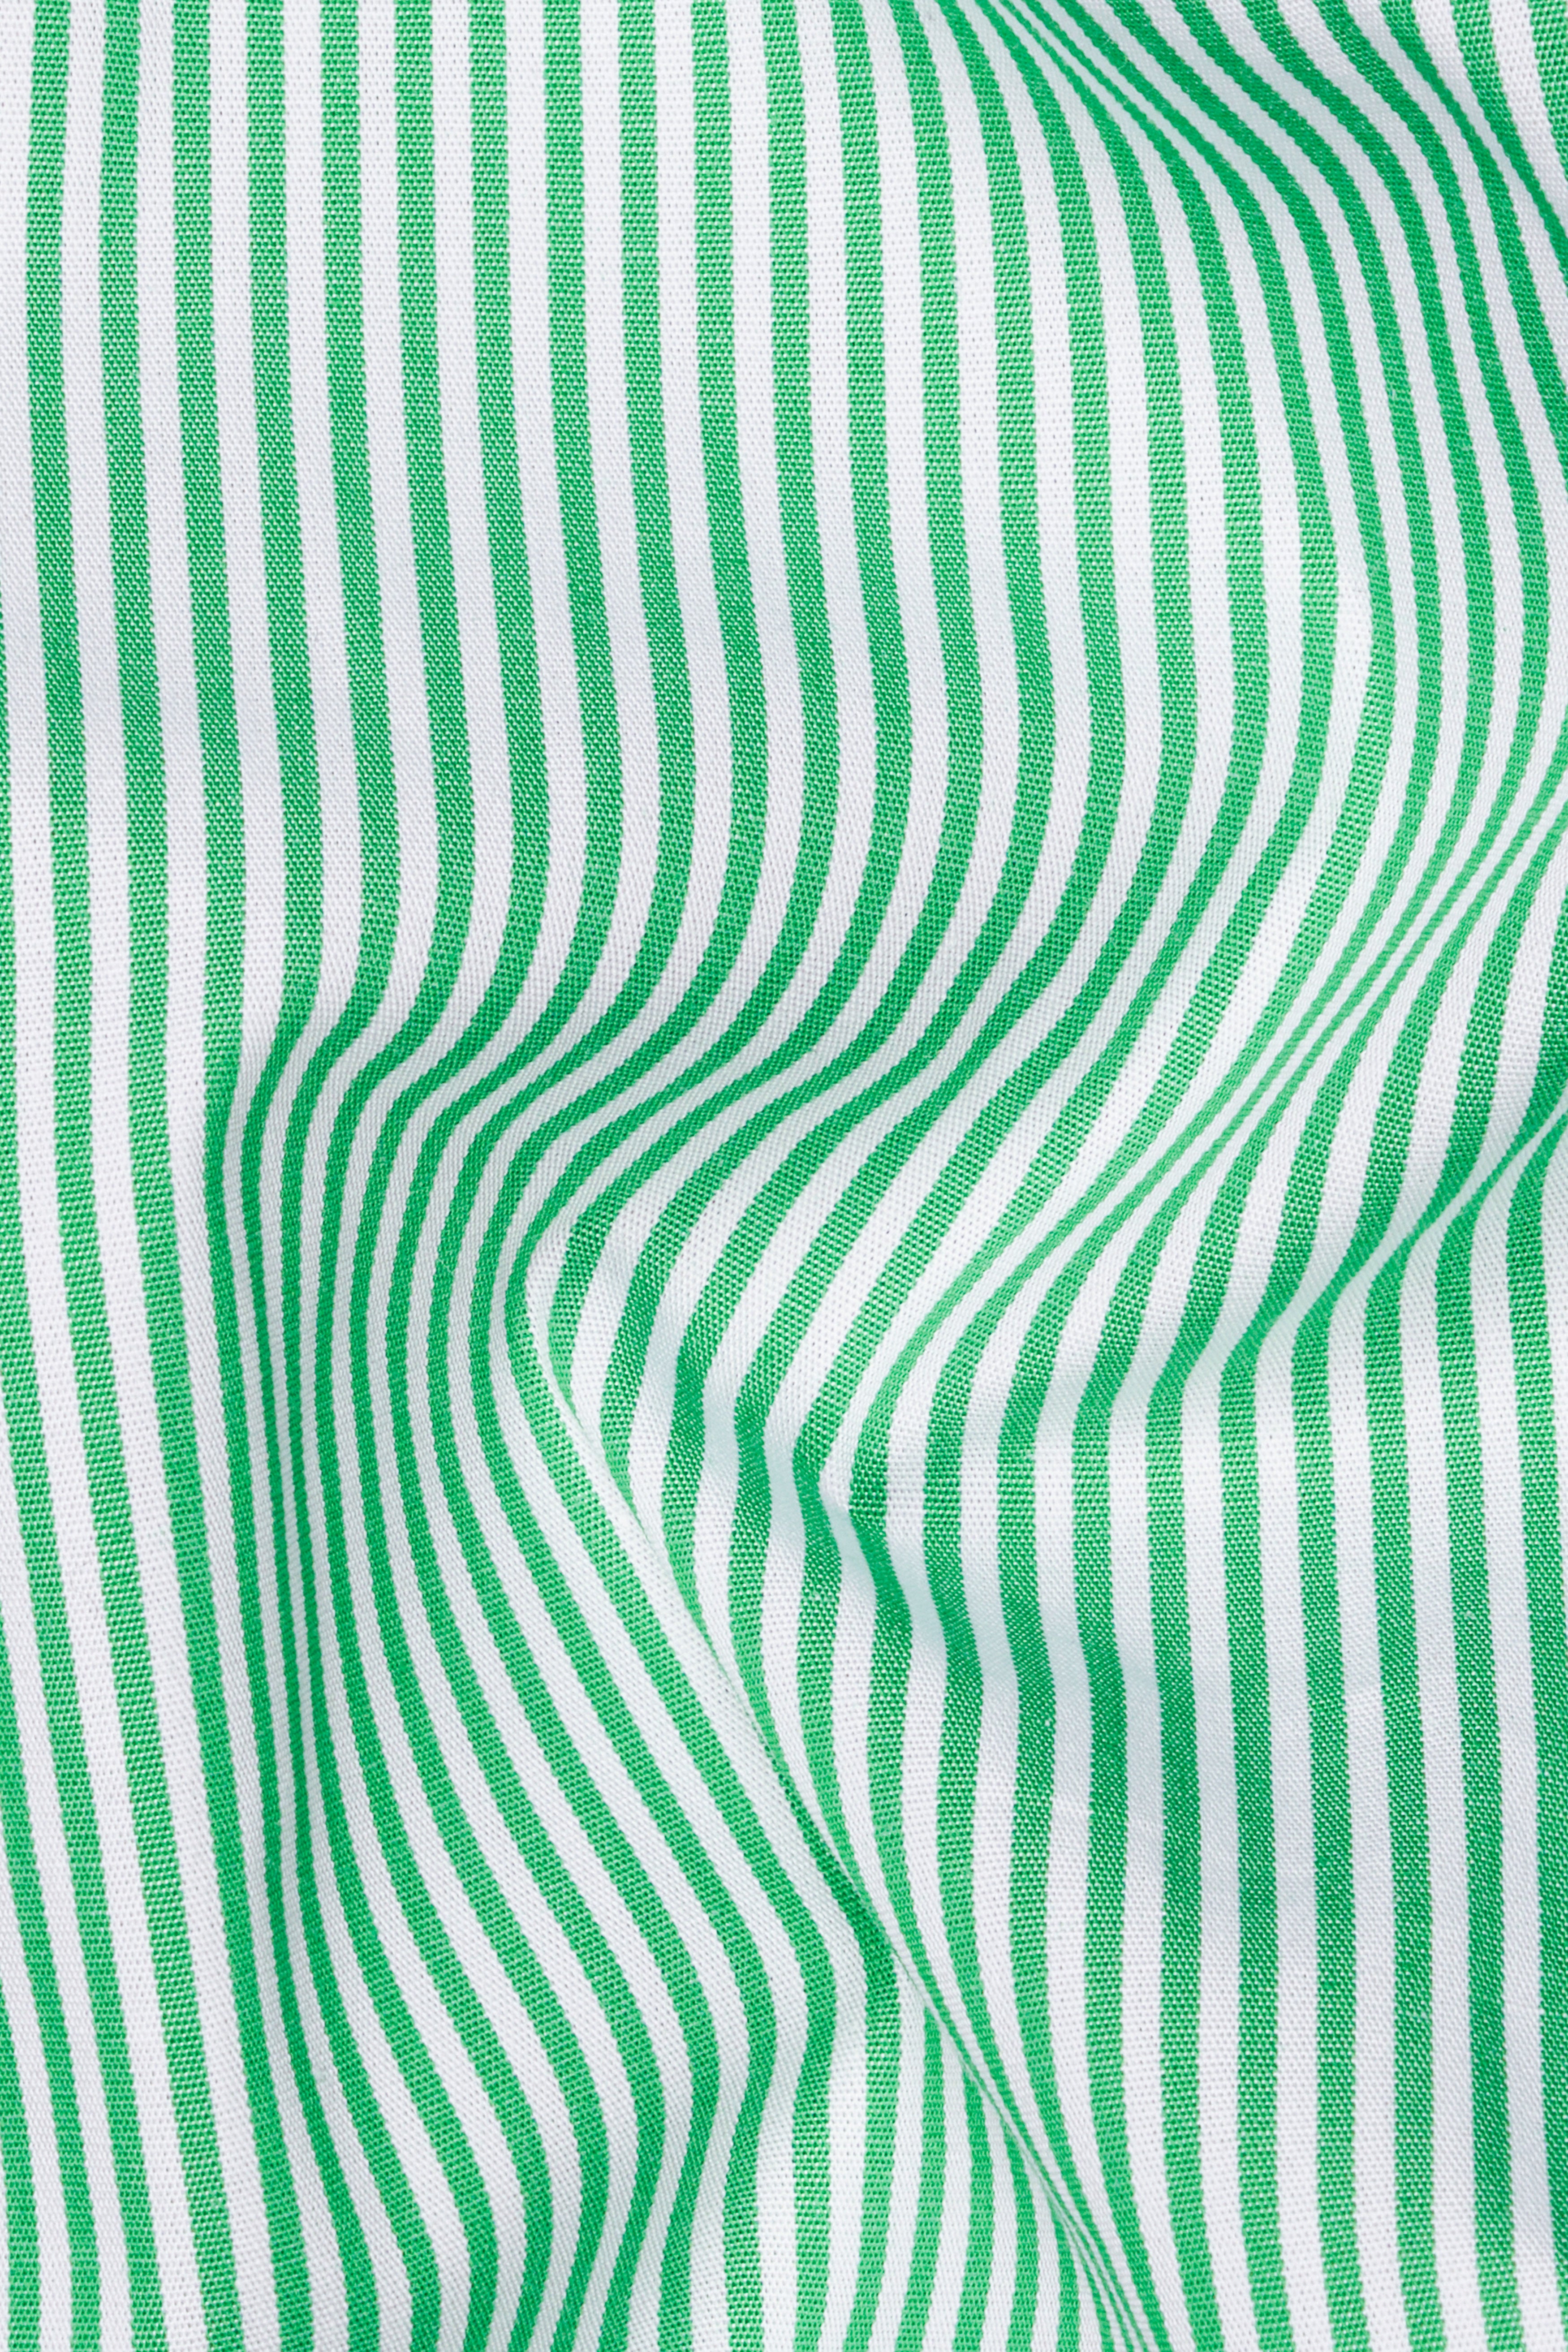 Downy Green Pinstriped Premium Cotton Button Down Shirt